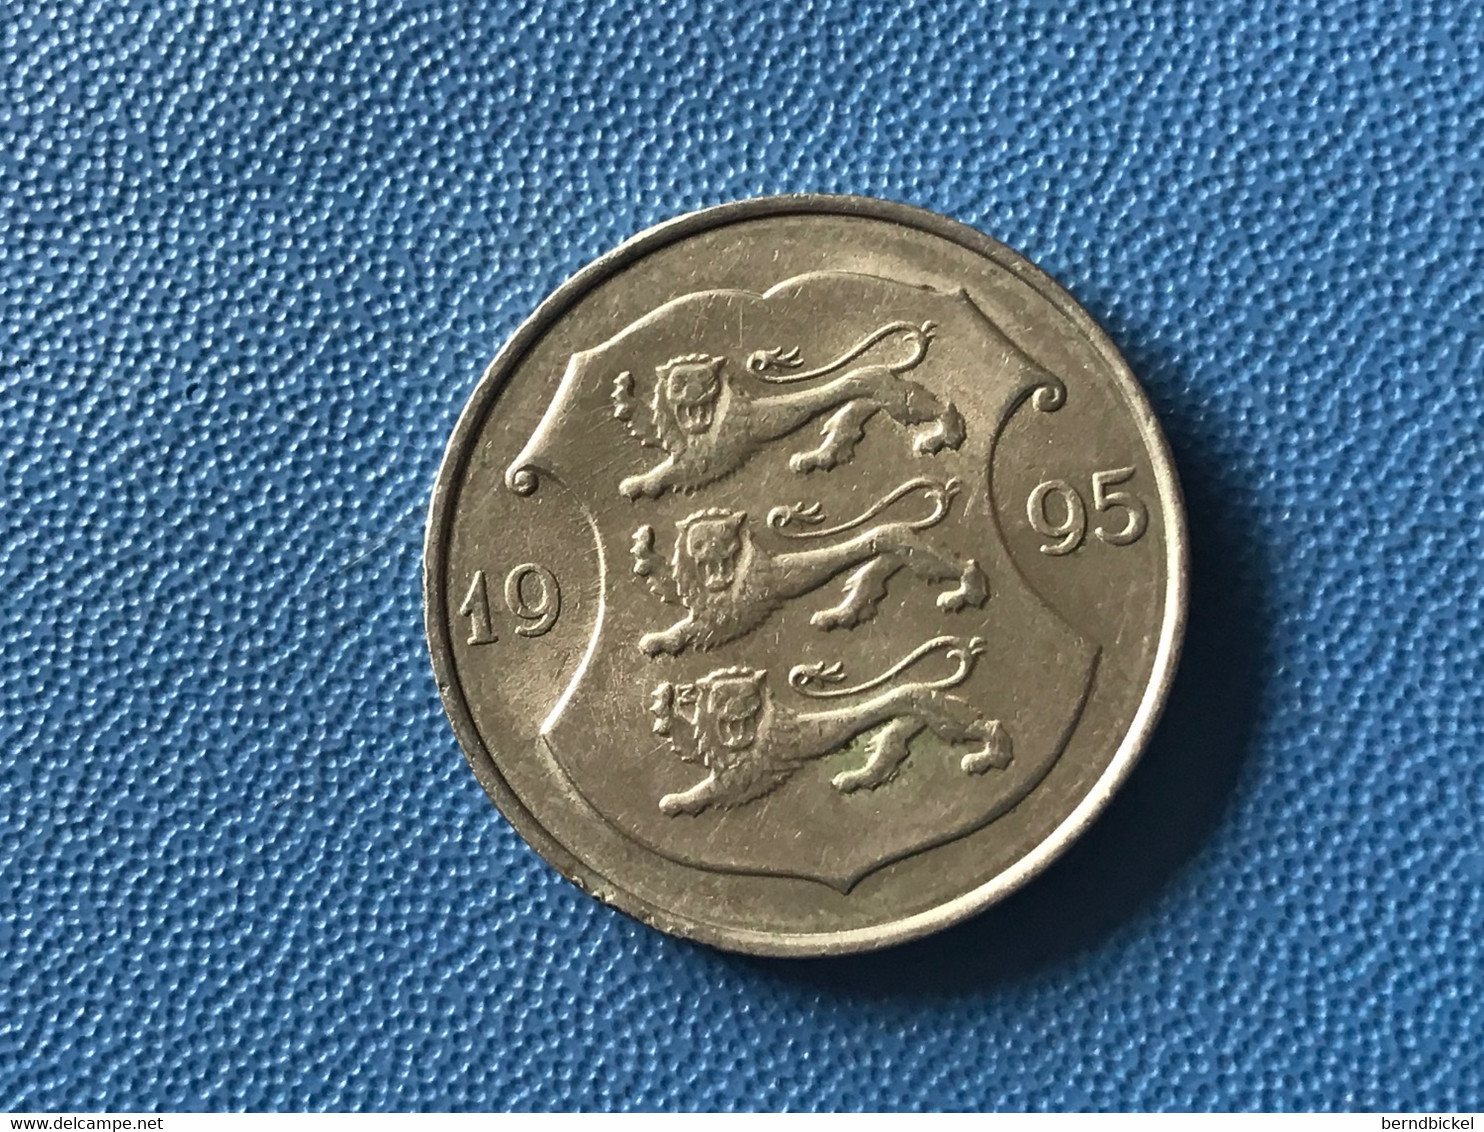 Münze Münzen Umlaufmünze Estland 1 Kroon 1995 - Estonia